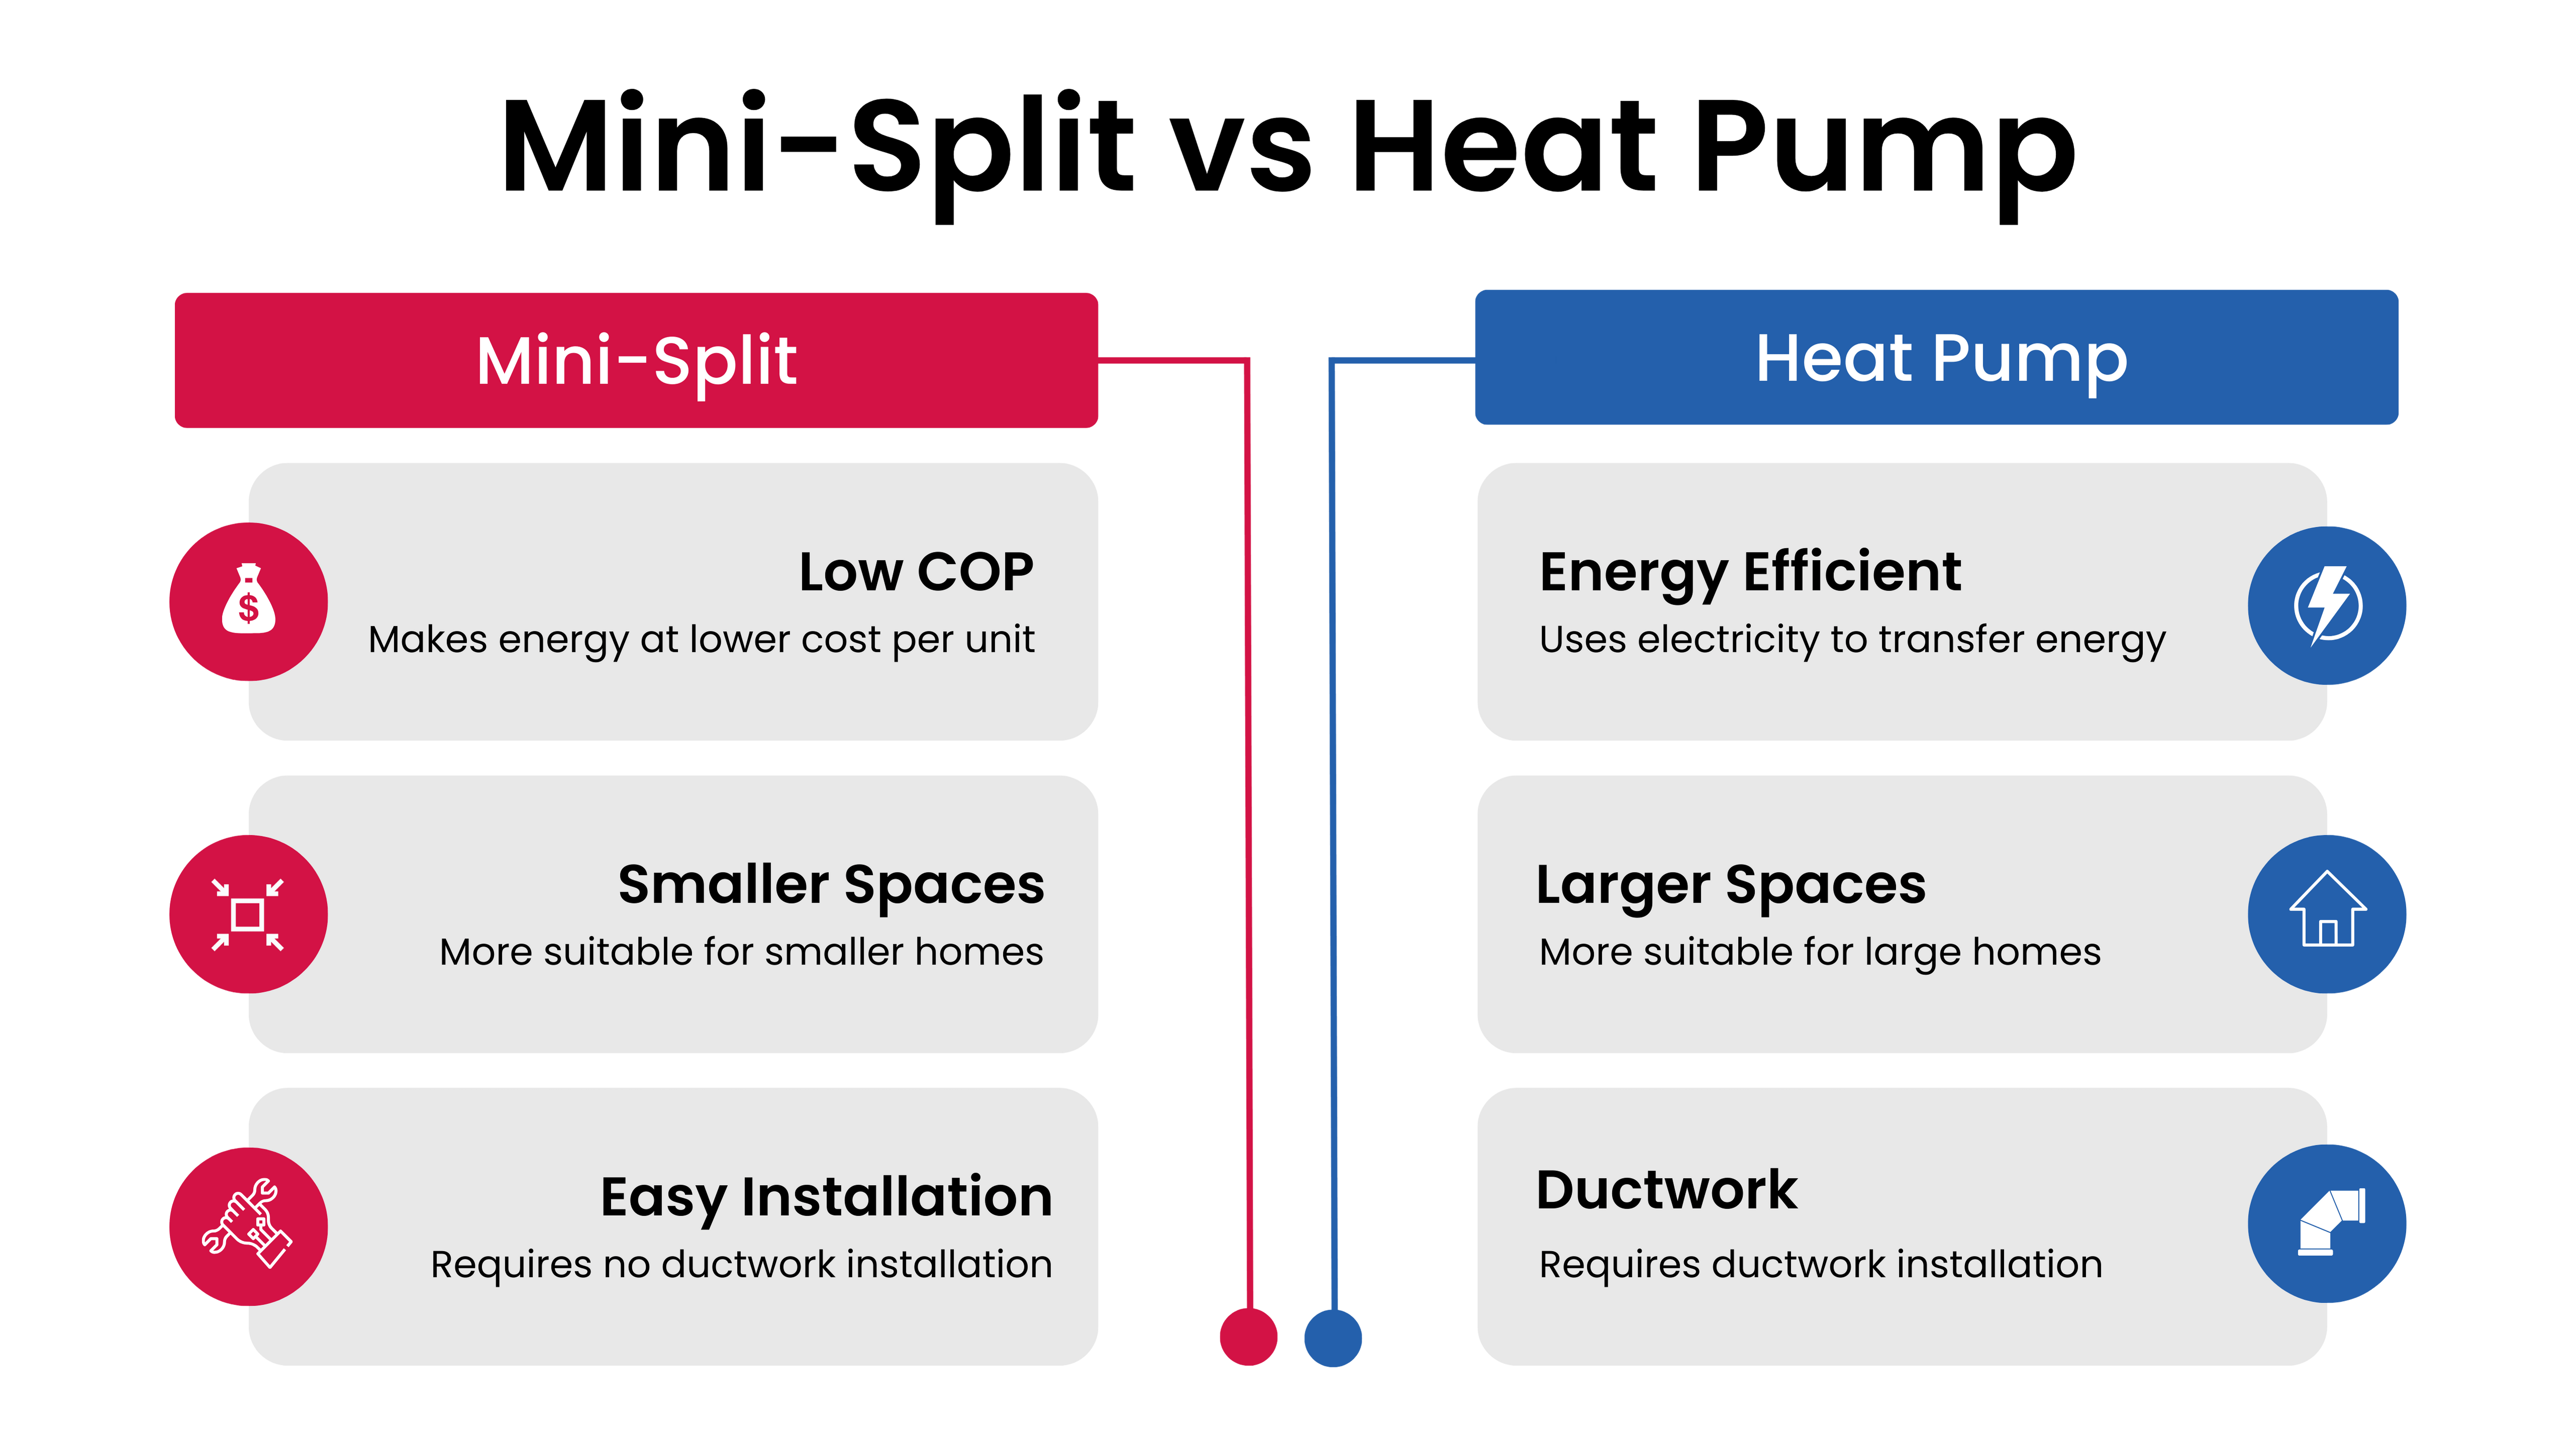 Mini split vs heat pump comparison of energy efficiency, versatility, and zoning capabilities